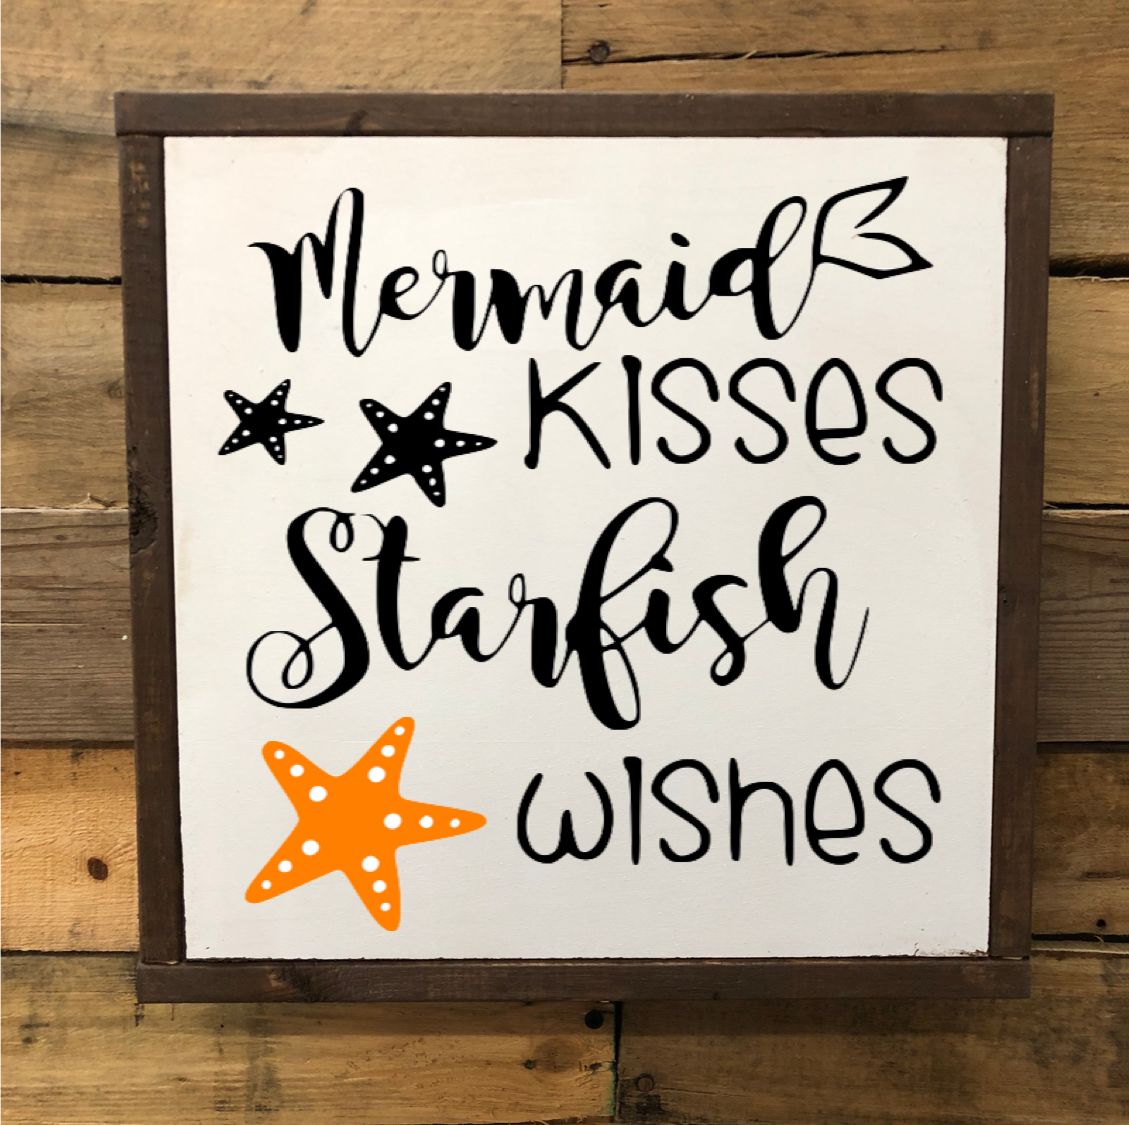 mermaid kisses starfish wishes.png